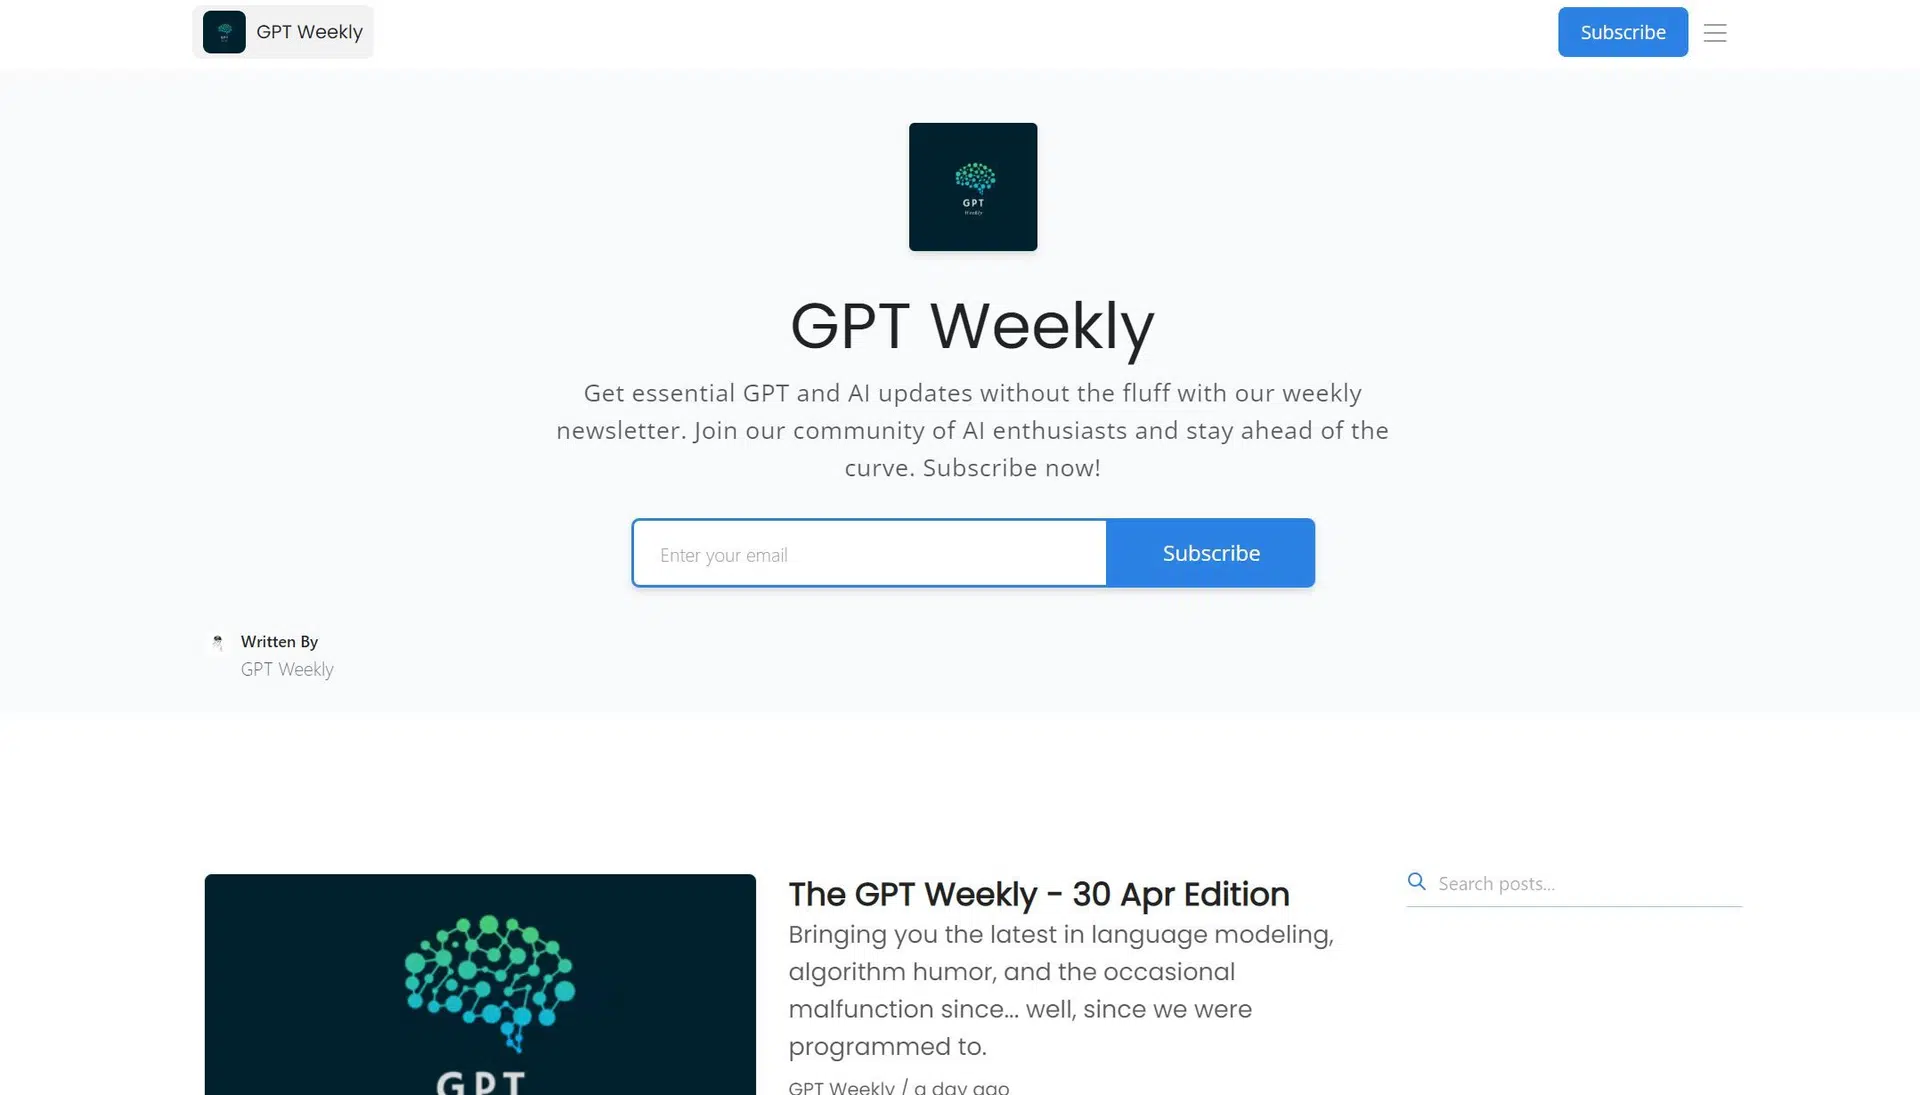 GPT Weeklywebsite picture